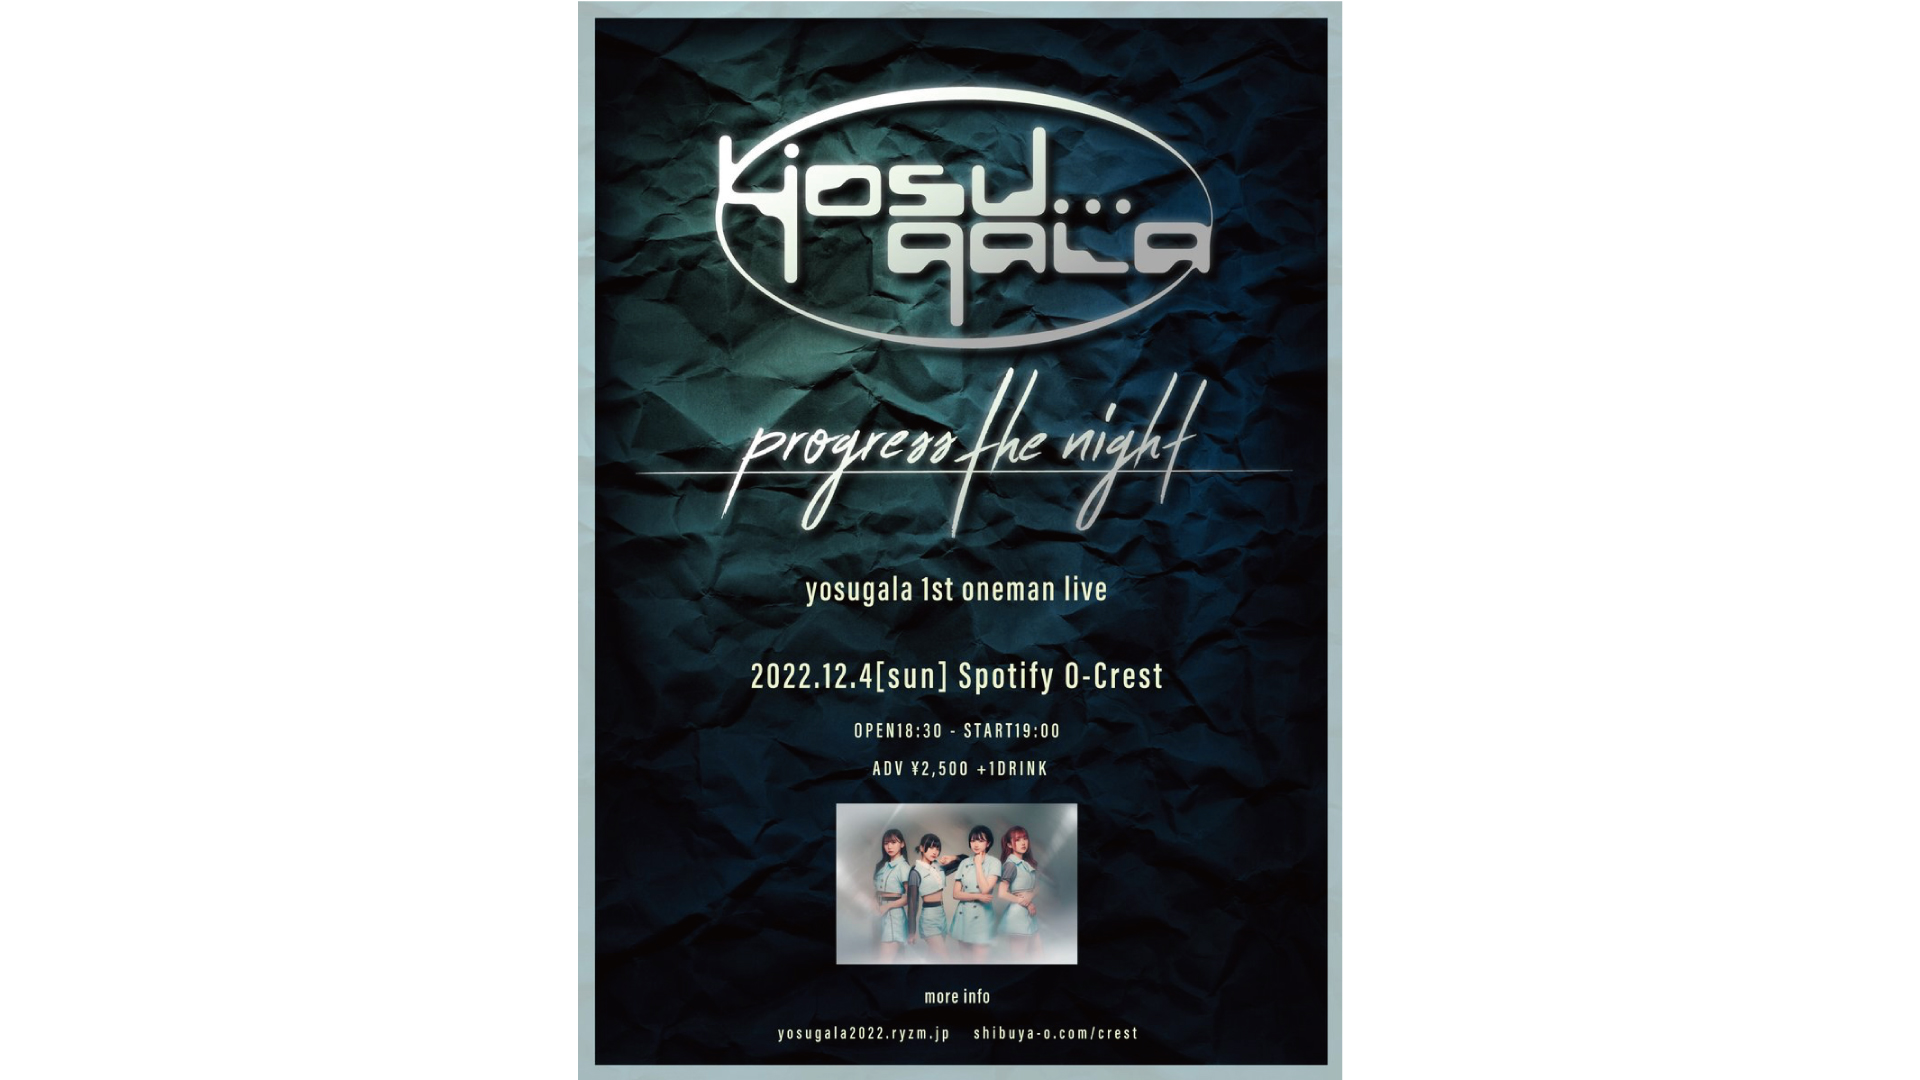 yosugala 1st oneman live「progress the night」22/12/4②